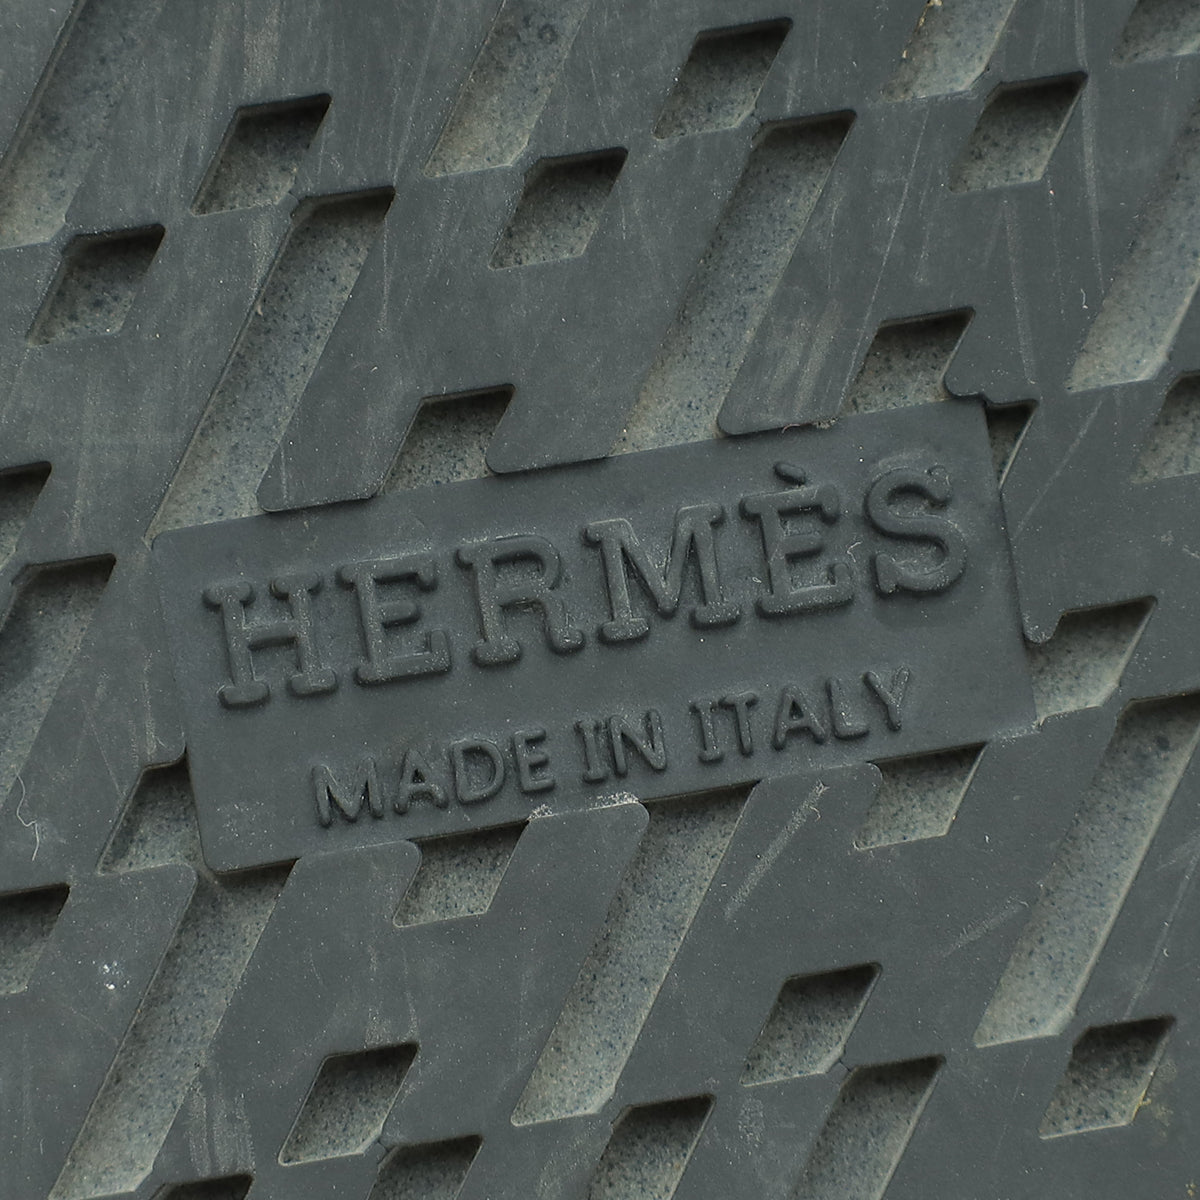 Hermes Black Chypre Sandal 39